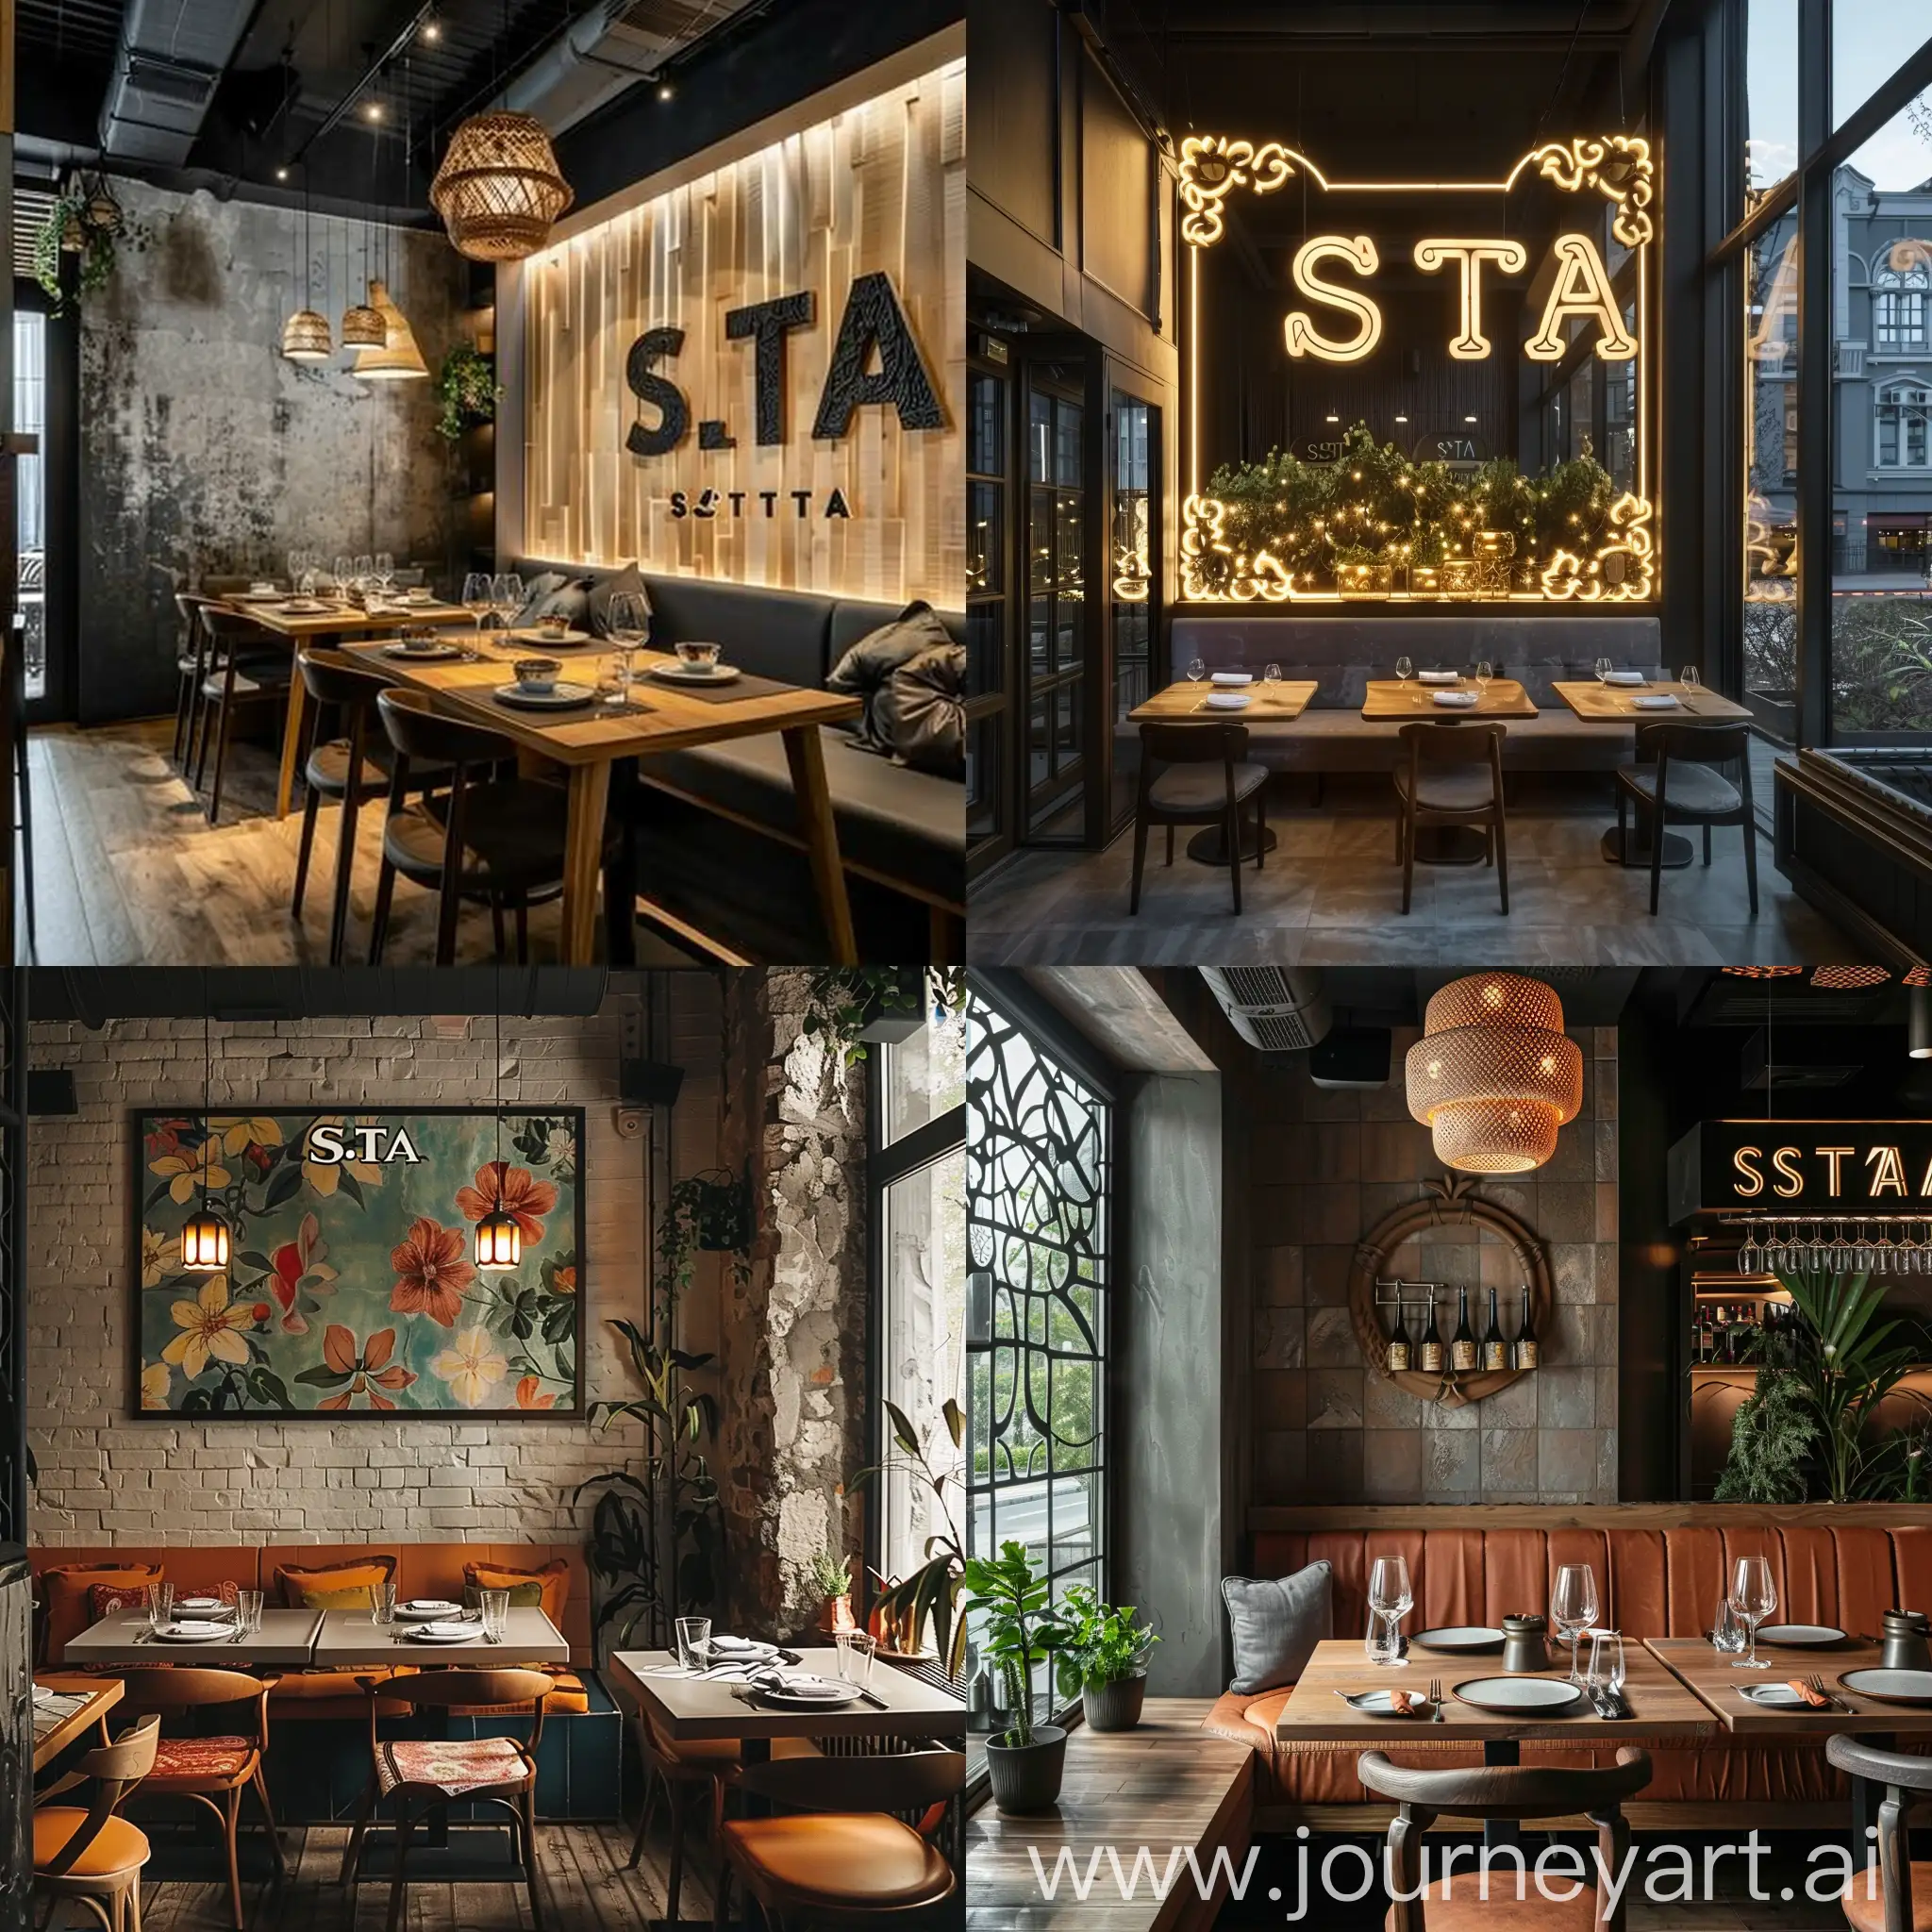 Modern-Slavic-Cuisine-Restaurant-STA-with-Russian-Motifs